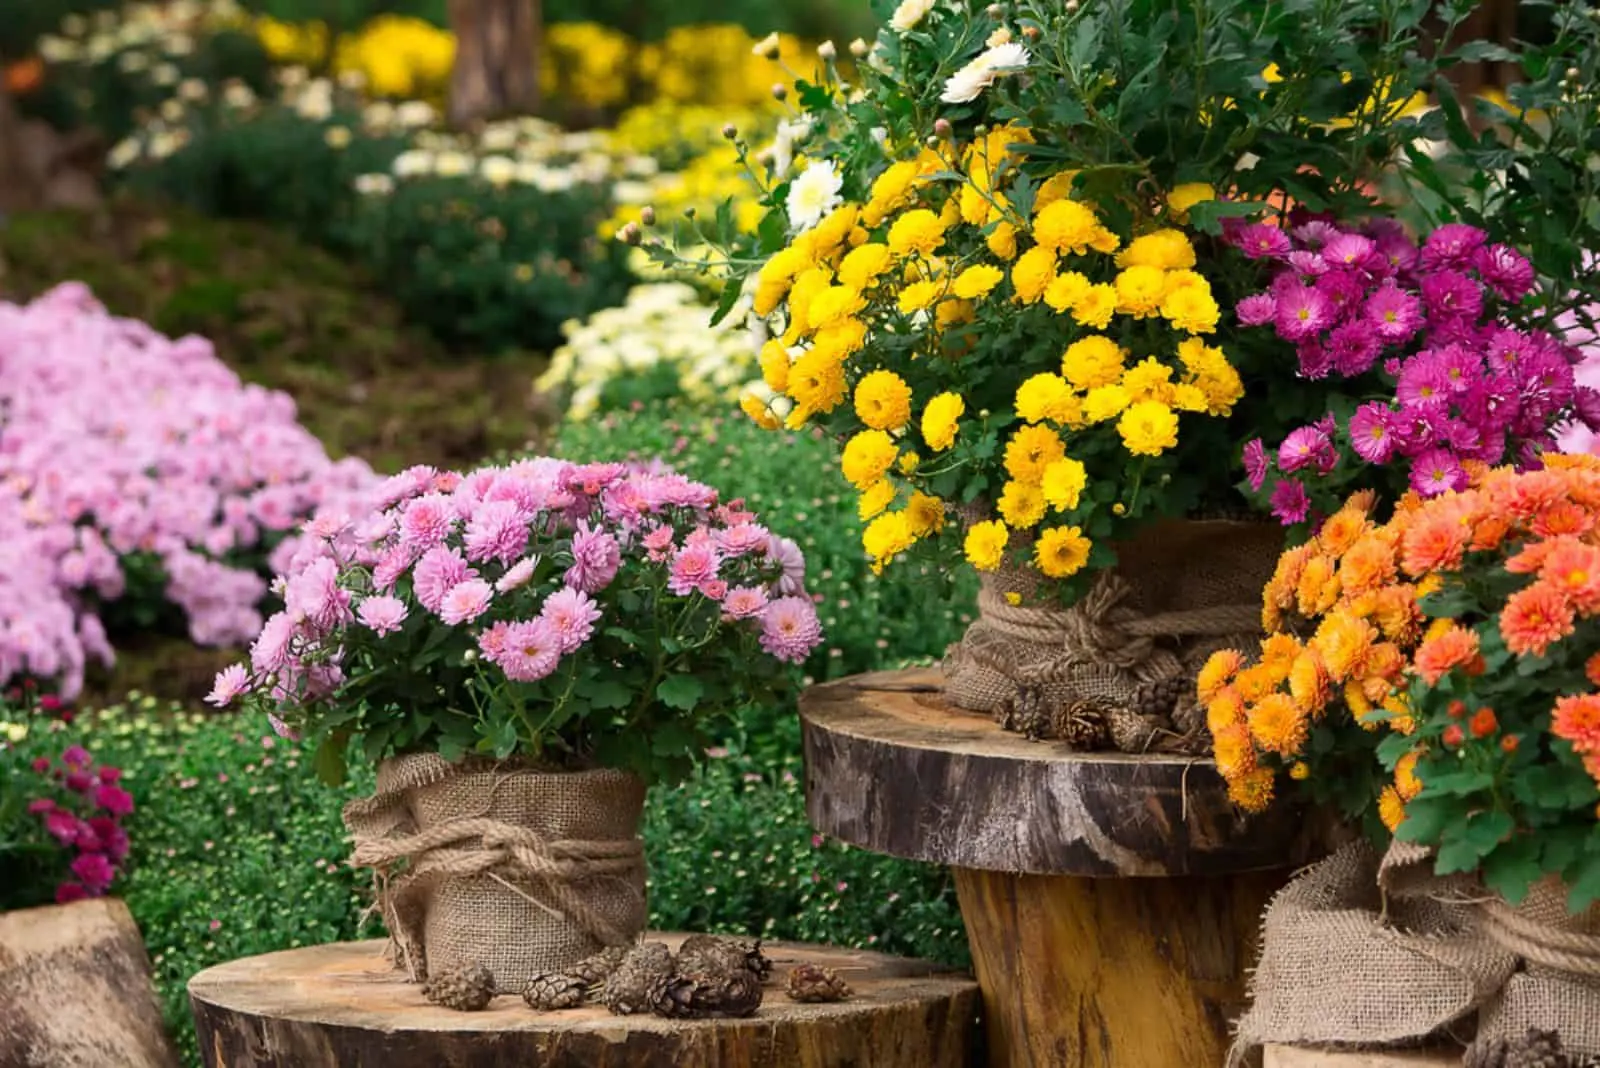 A bouquet of beautiful chrysanthemum flowers outdoors